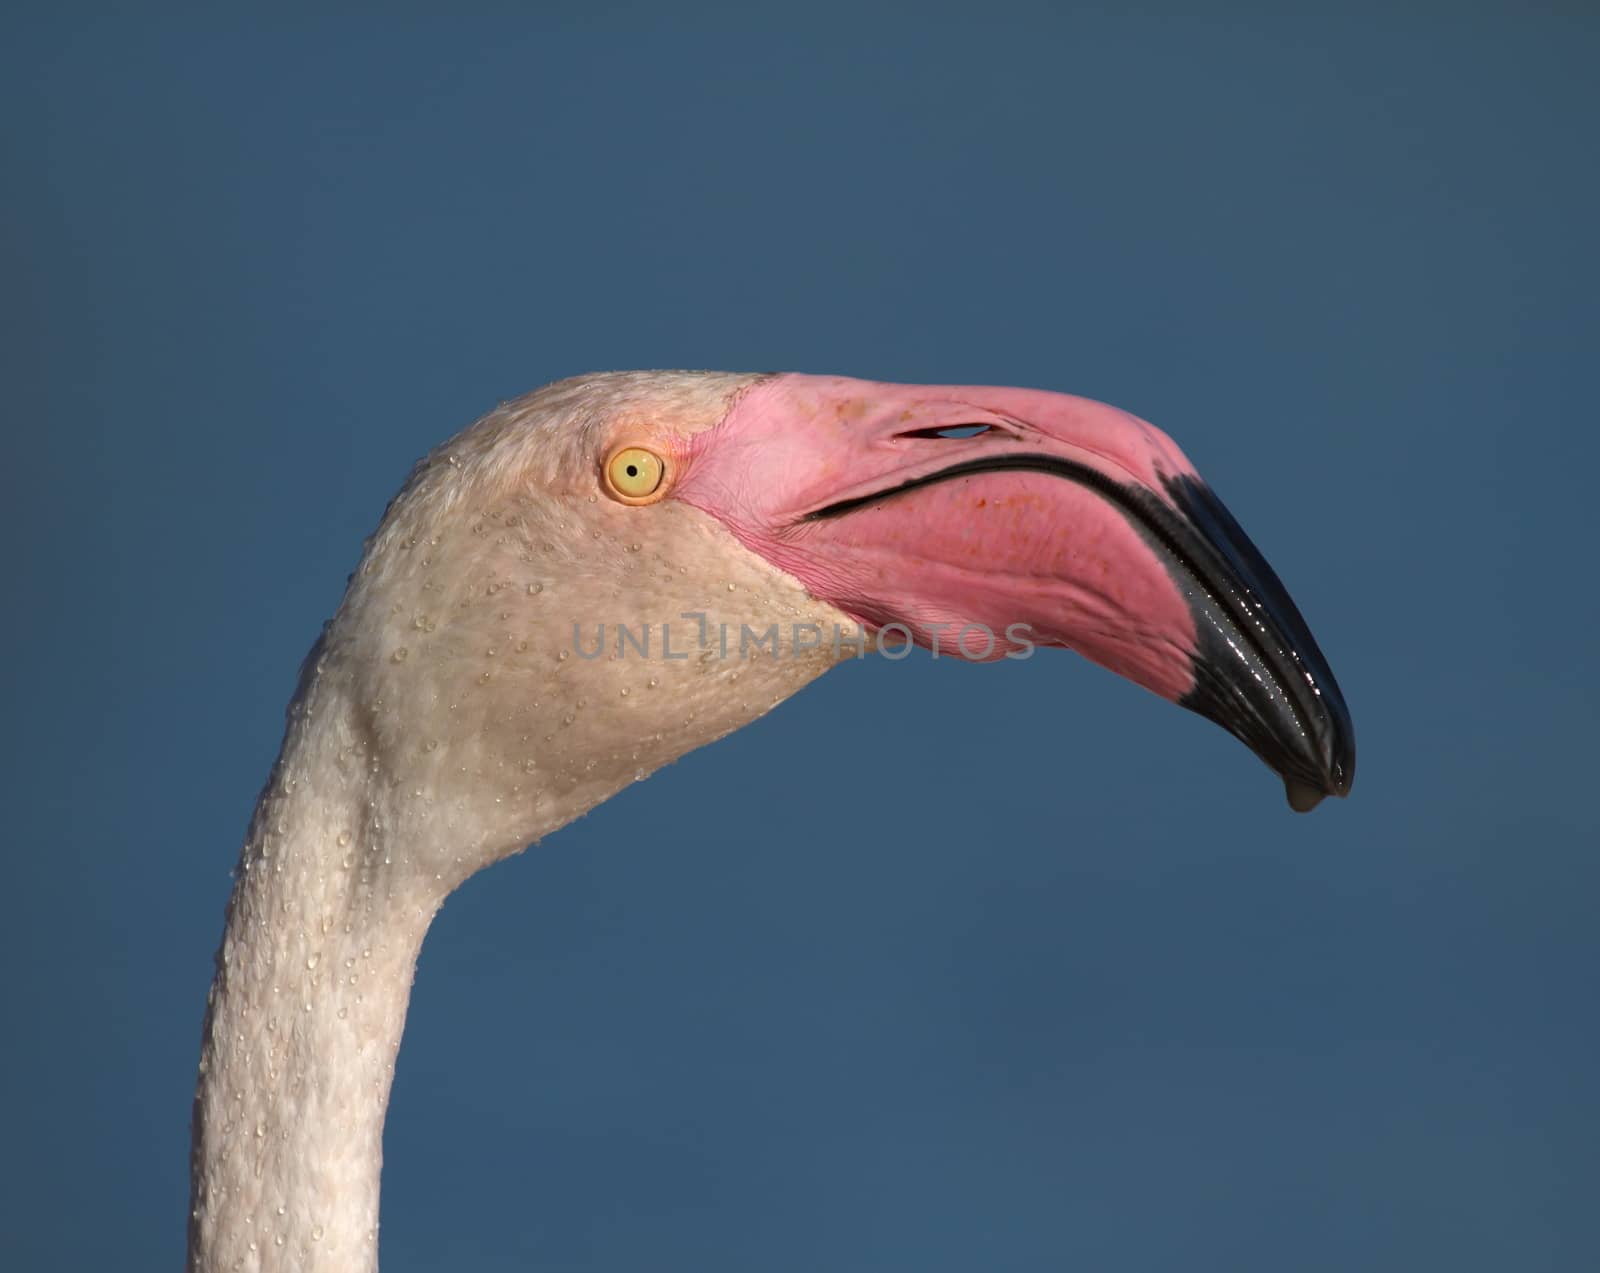 Greater flamingo, phoenicopterus roseus, portrait, Camargue, France by Elenaphotos21